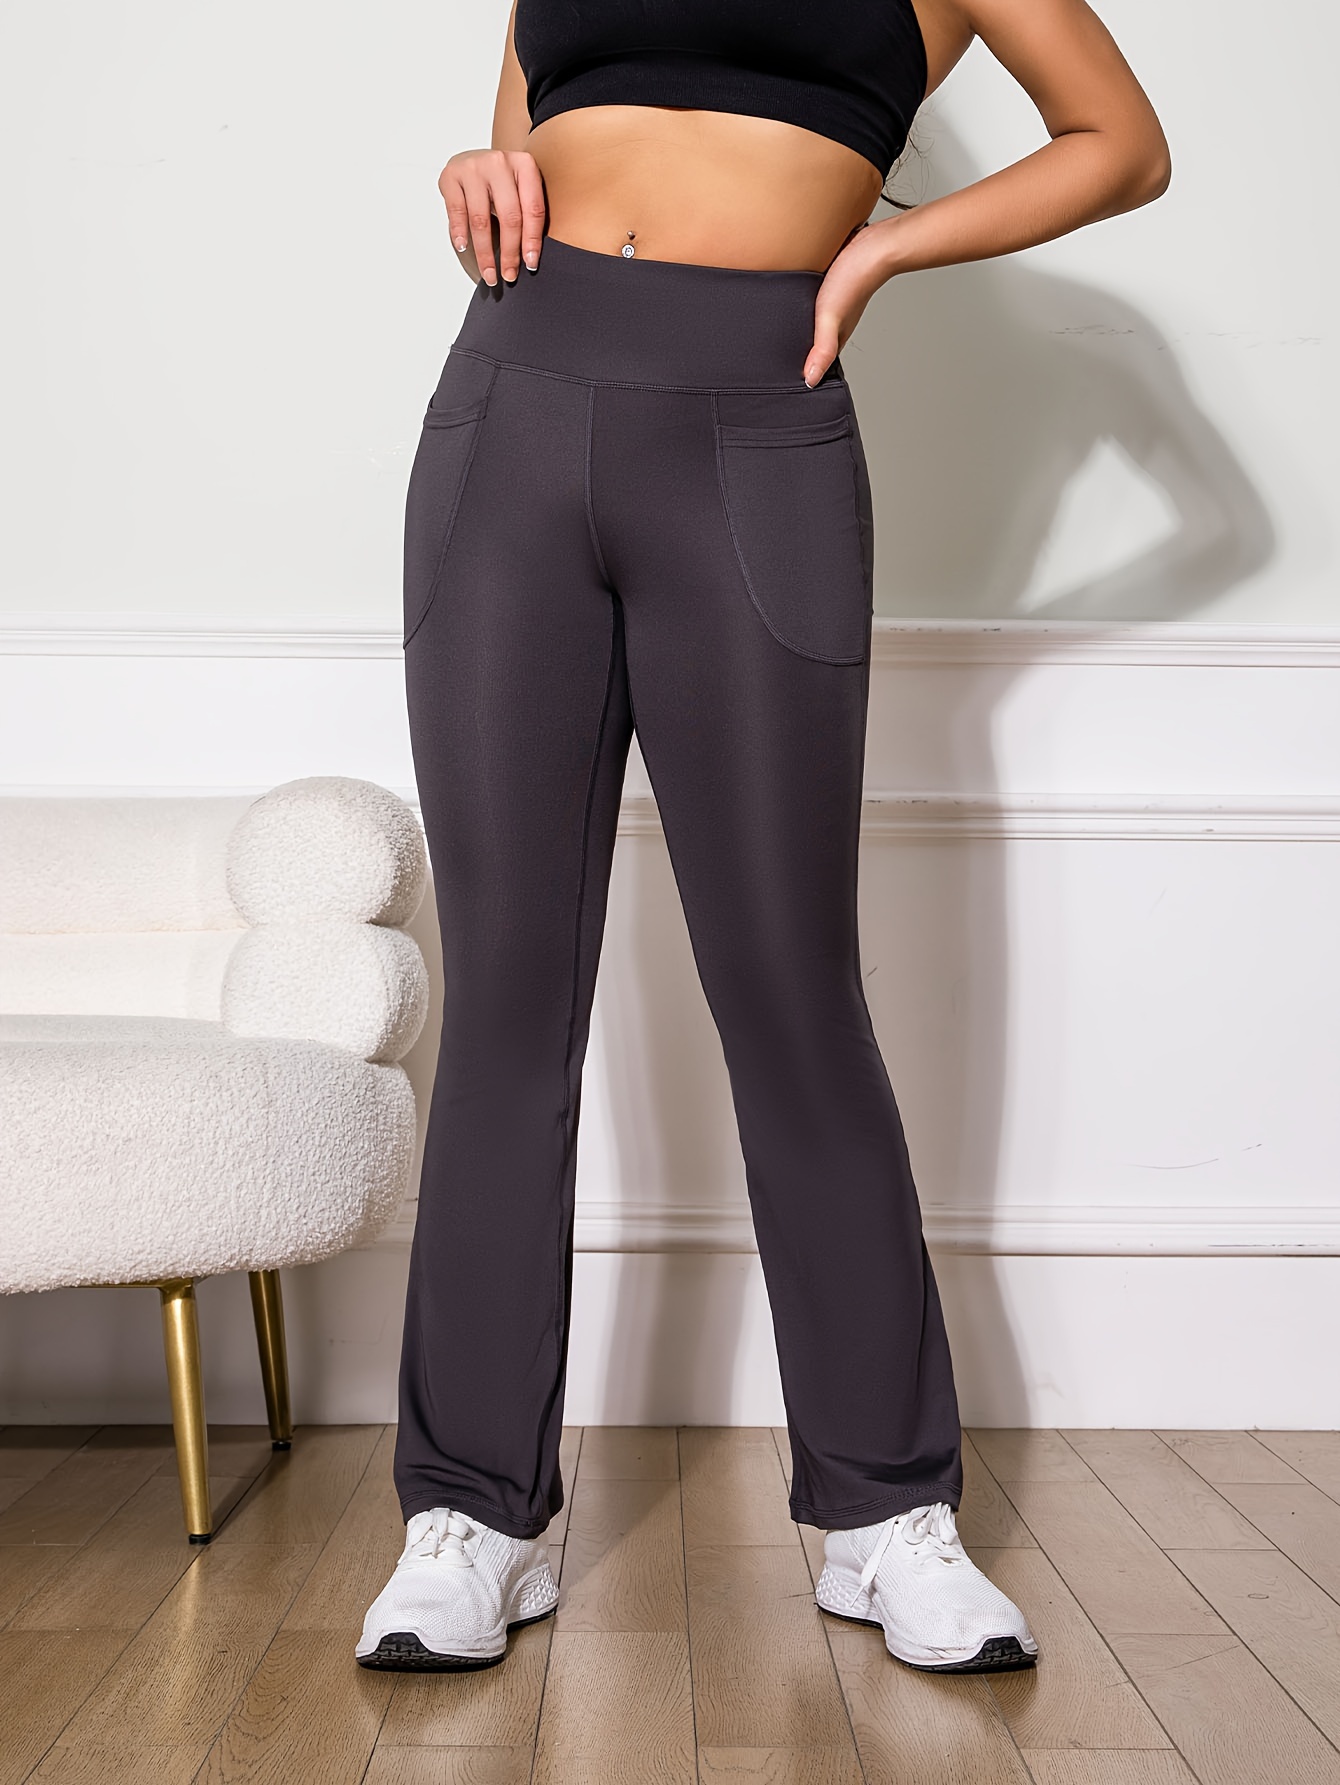 Solid High Waist Yoga Pants Pocket Quick Drying Butt Lifting